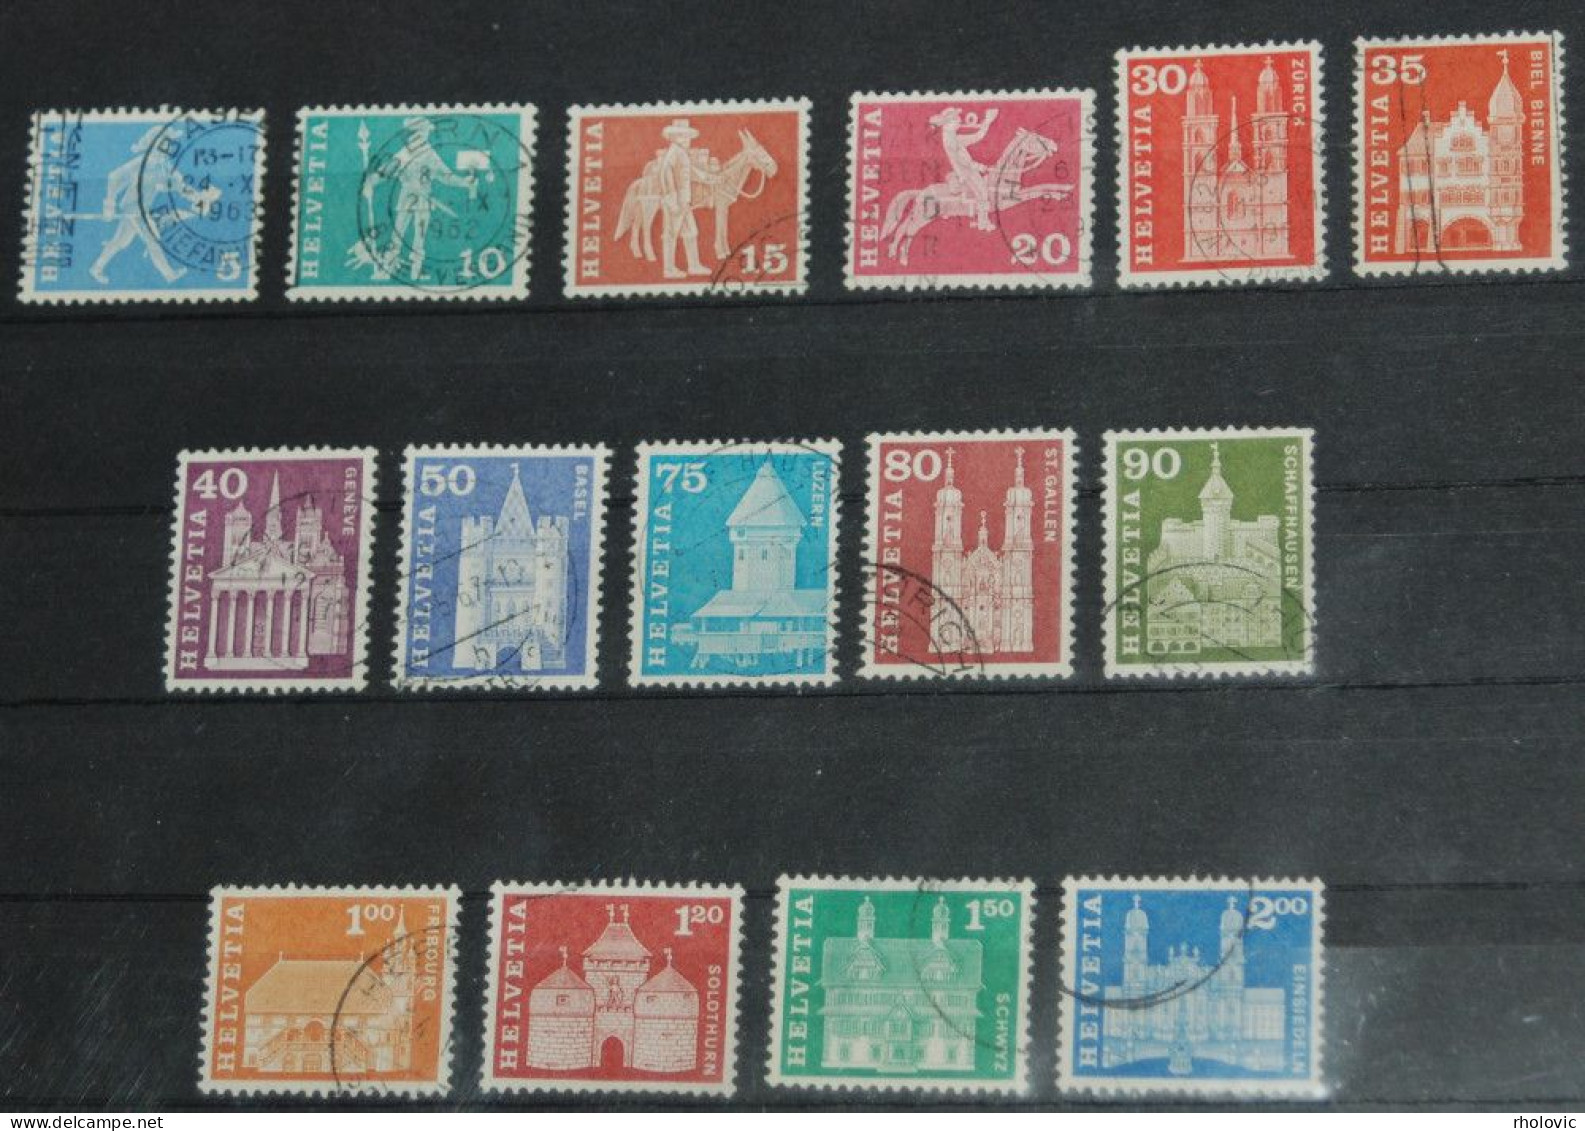 SWITZERLAND 1960, Postal History, Monuments, Buildings, Architecture, Used - Denkmäler